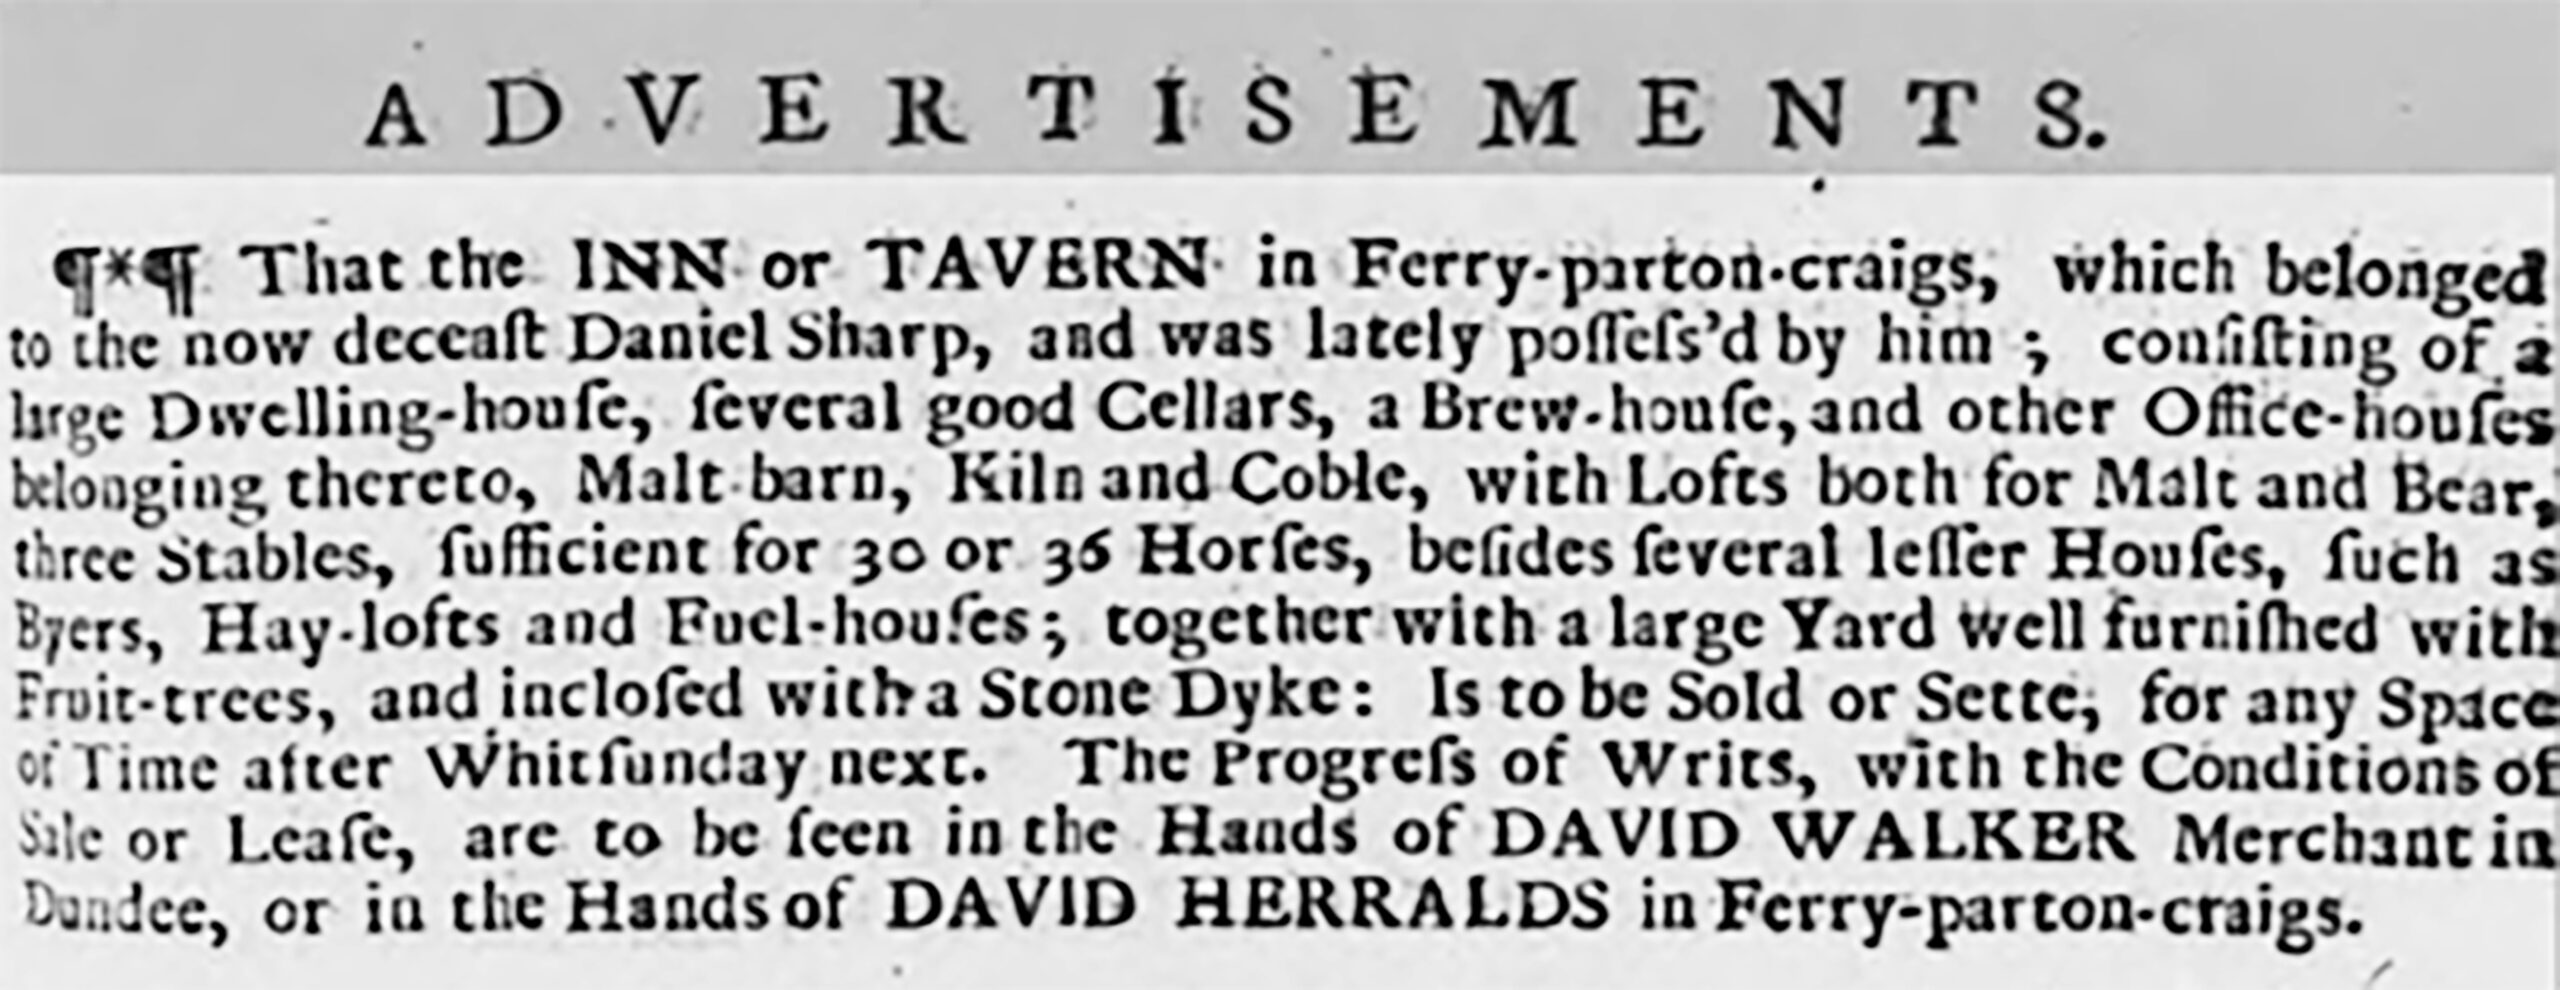 Tayport Heritage Trail - Board 2 - 1725 advert for sale of Inn